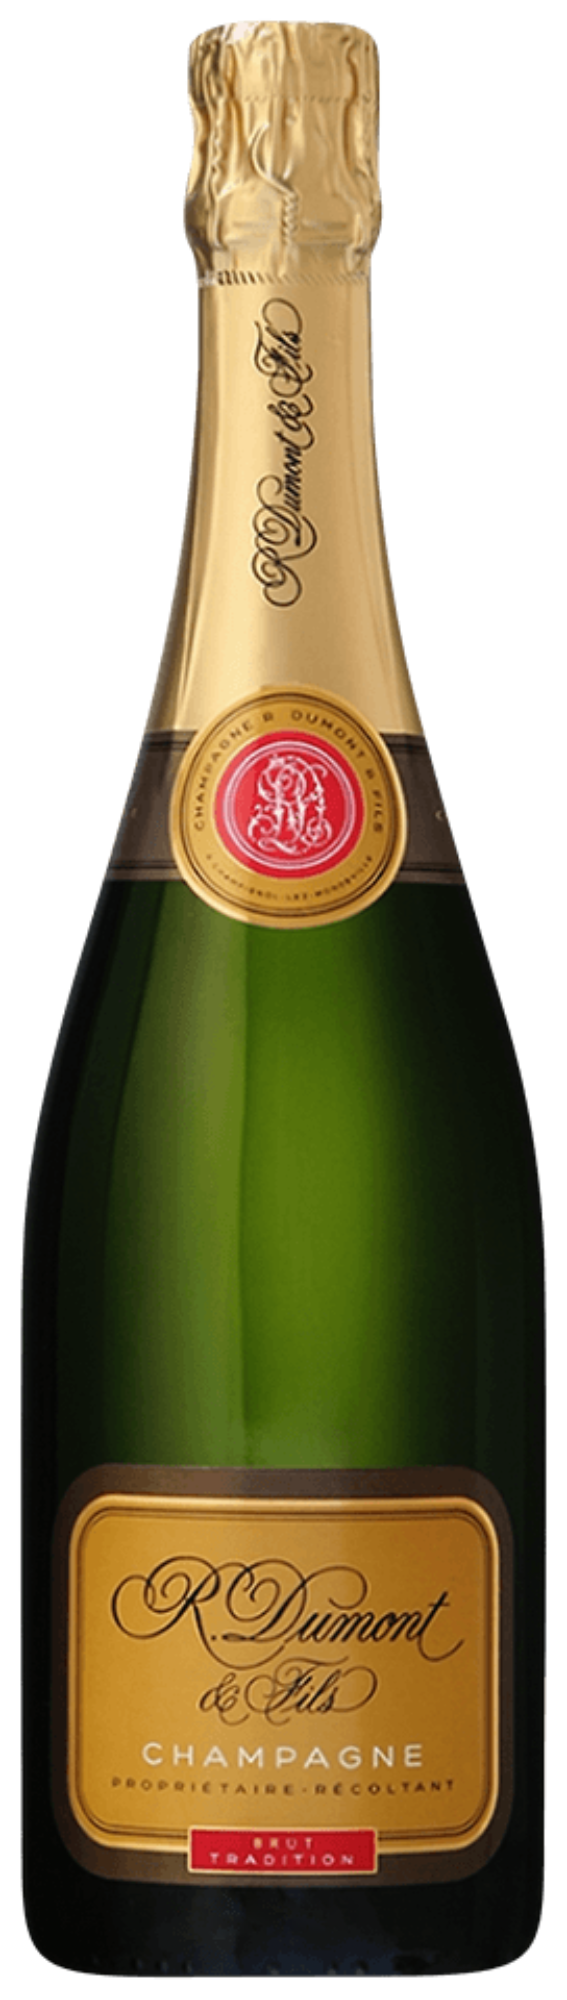 Champagne R. Dumont & Fils Brut Tradition NV 750ml